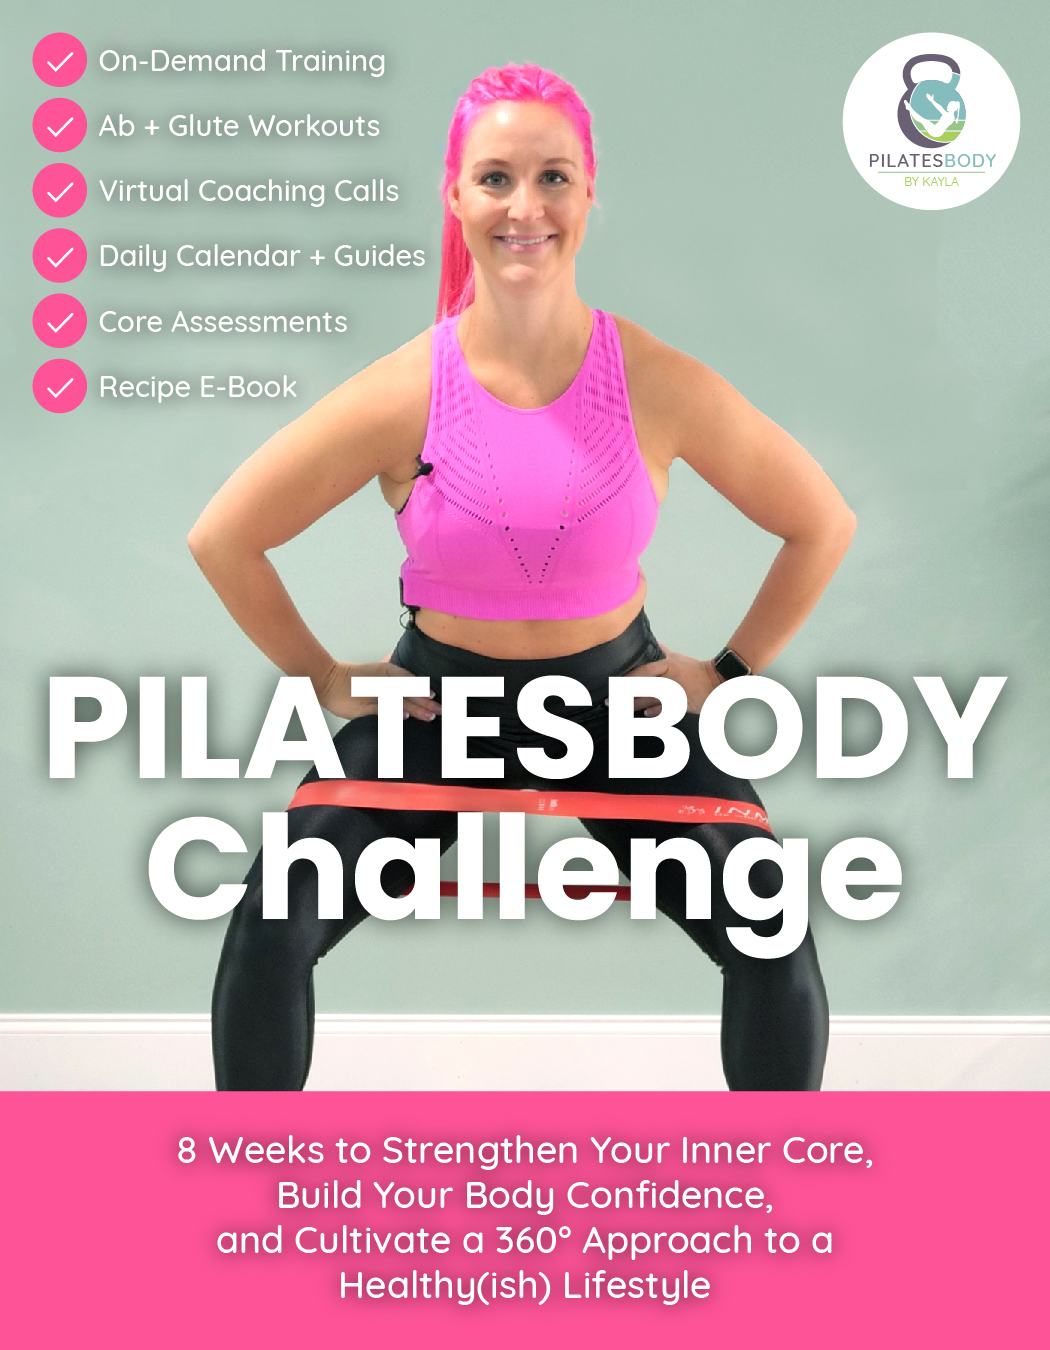 Pilates Workout Programs - On-Demand Virtual Fitness - PILATESBODY